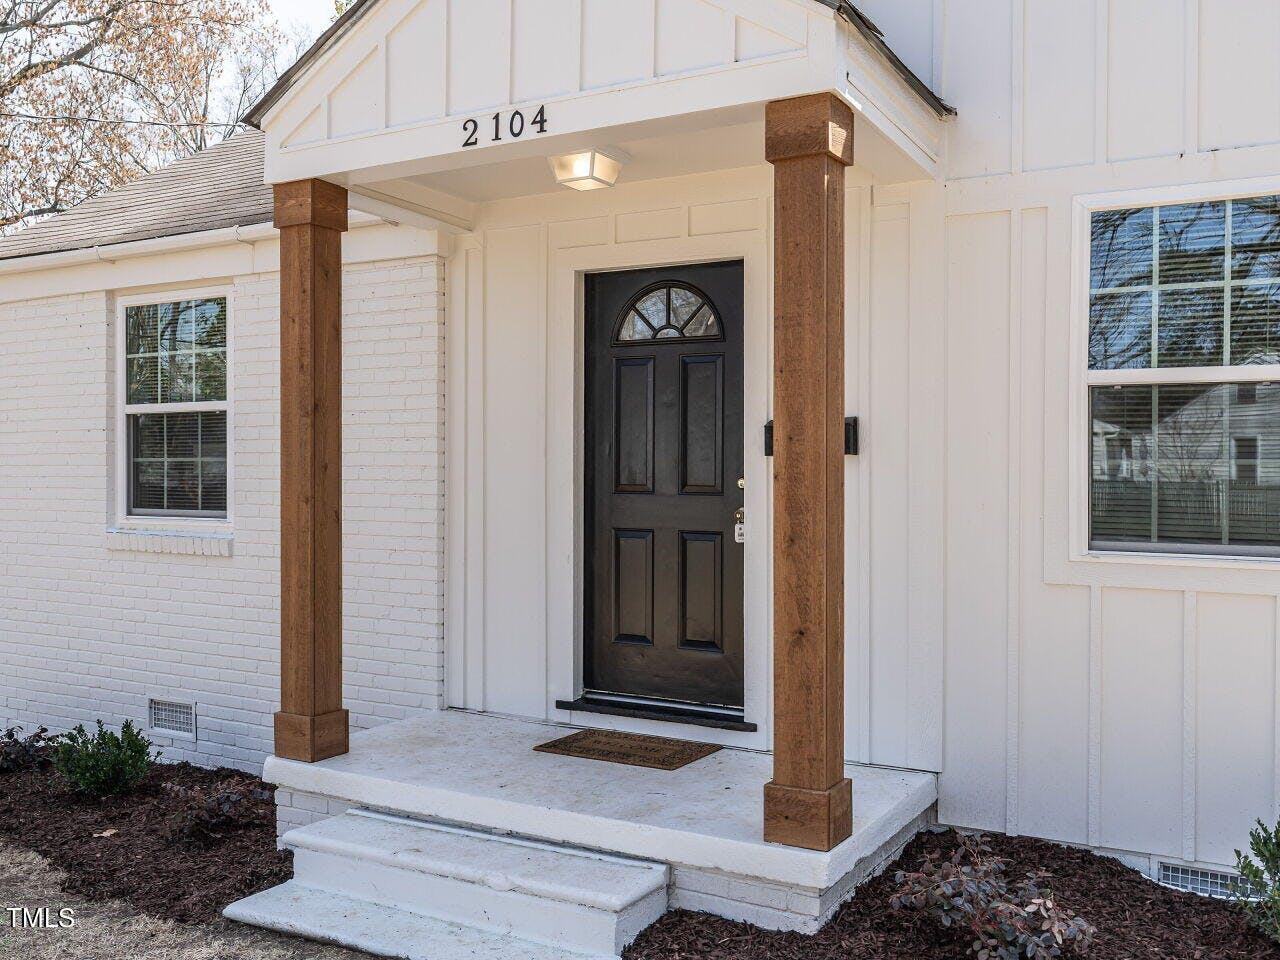 004-1280x960-front-porch